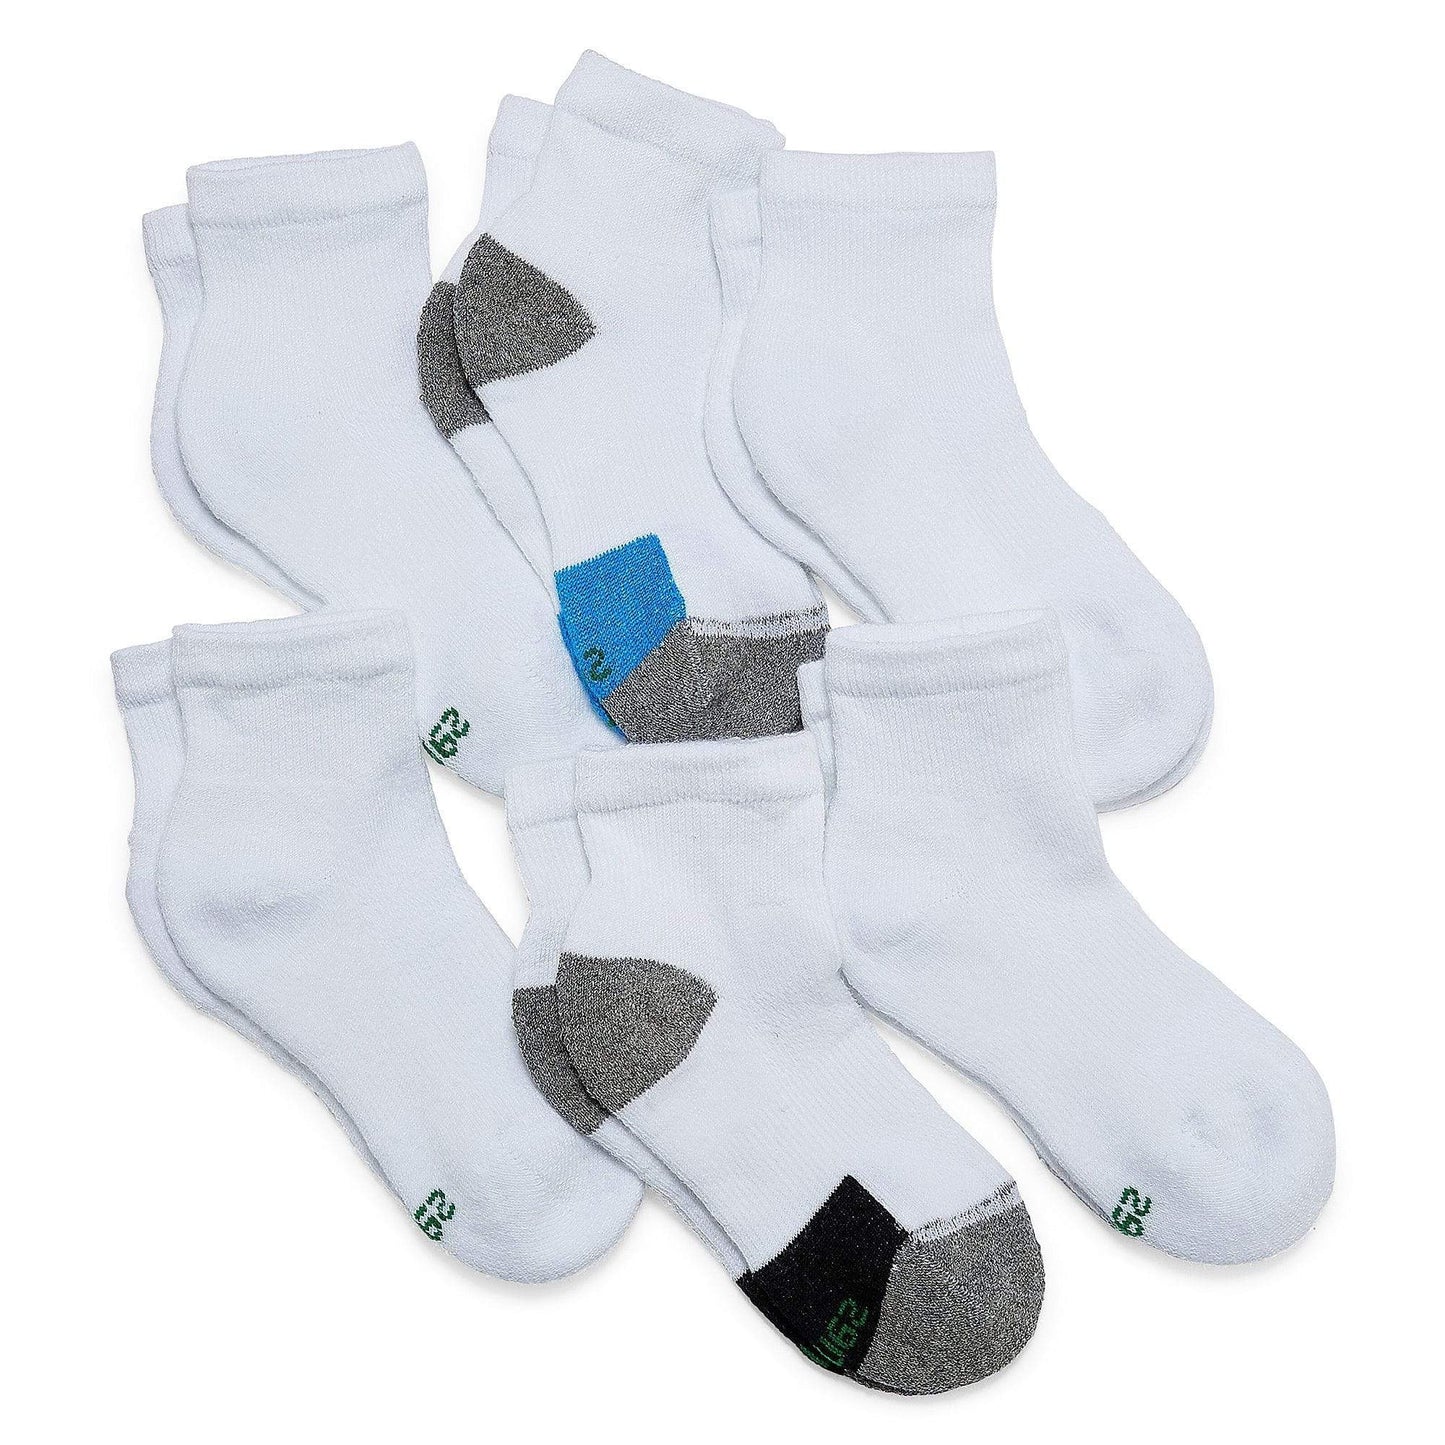 HANES Clothing Accessories M / White HANES - 6 Pair Quarter Socks